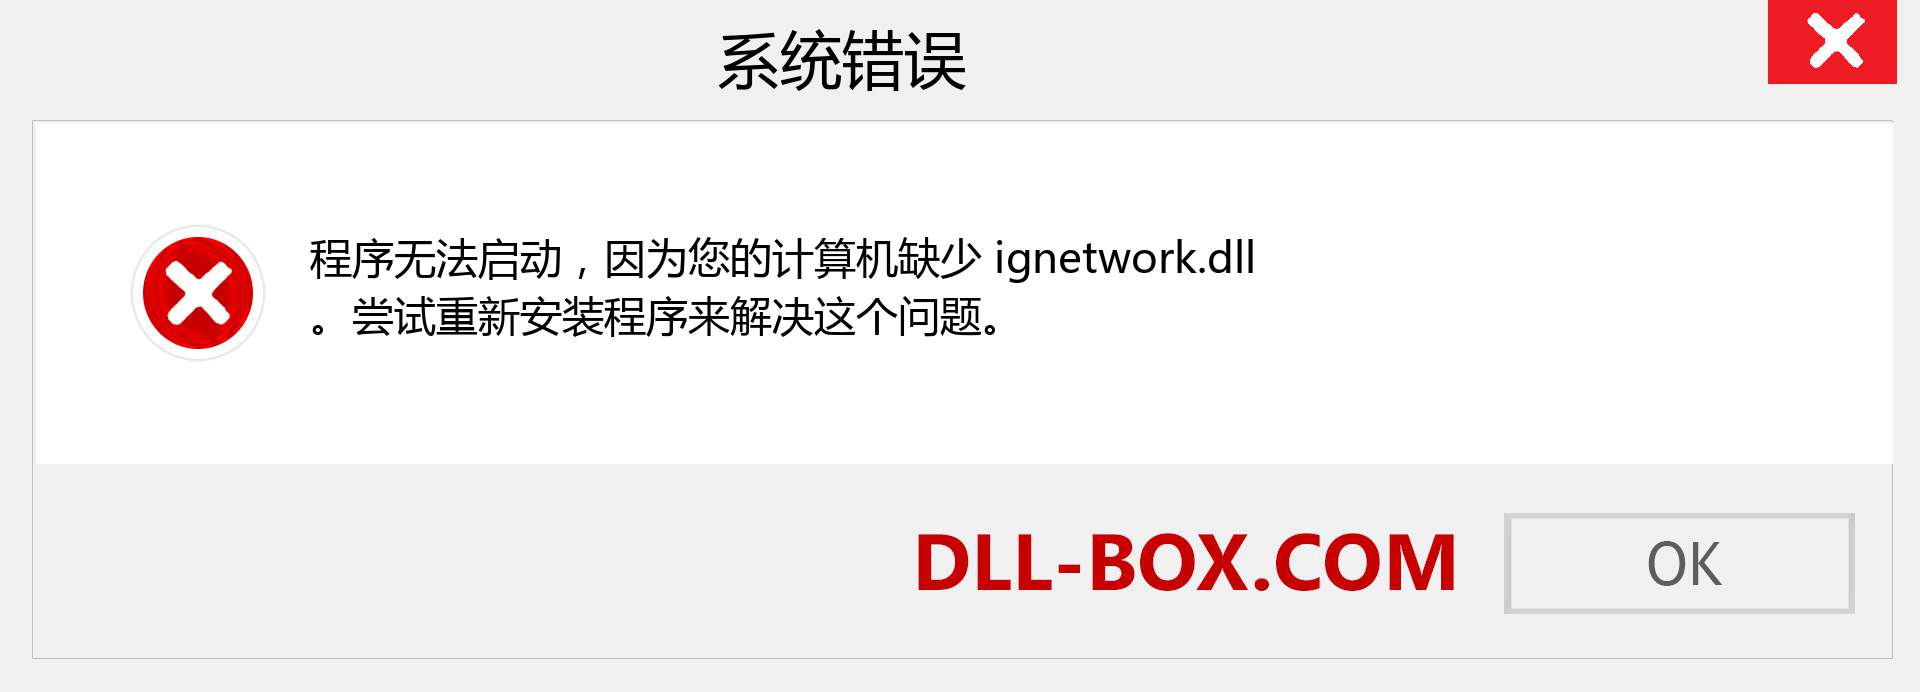 ignetwork.dll 文件丢失？。 适用于 Windows 7、8、10 的下载 - 修复 Windows、照片、图像上的 ignetwork dll 丢失错误